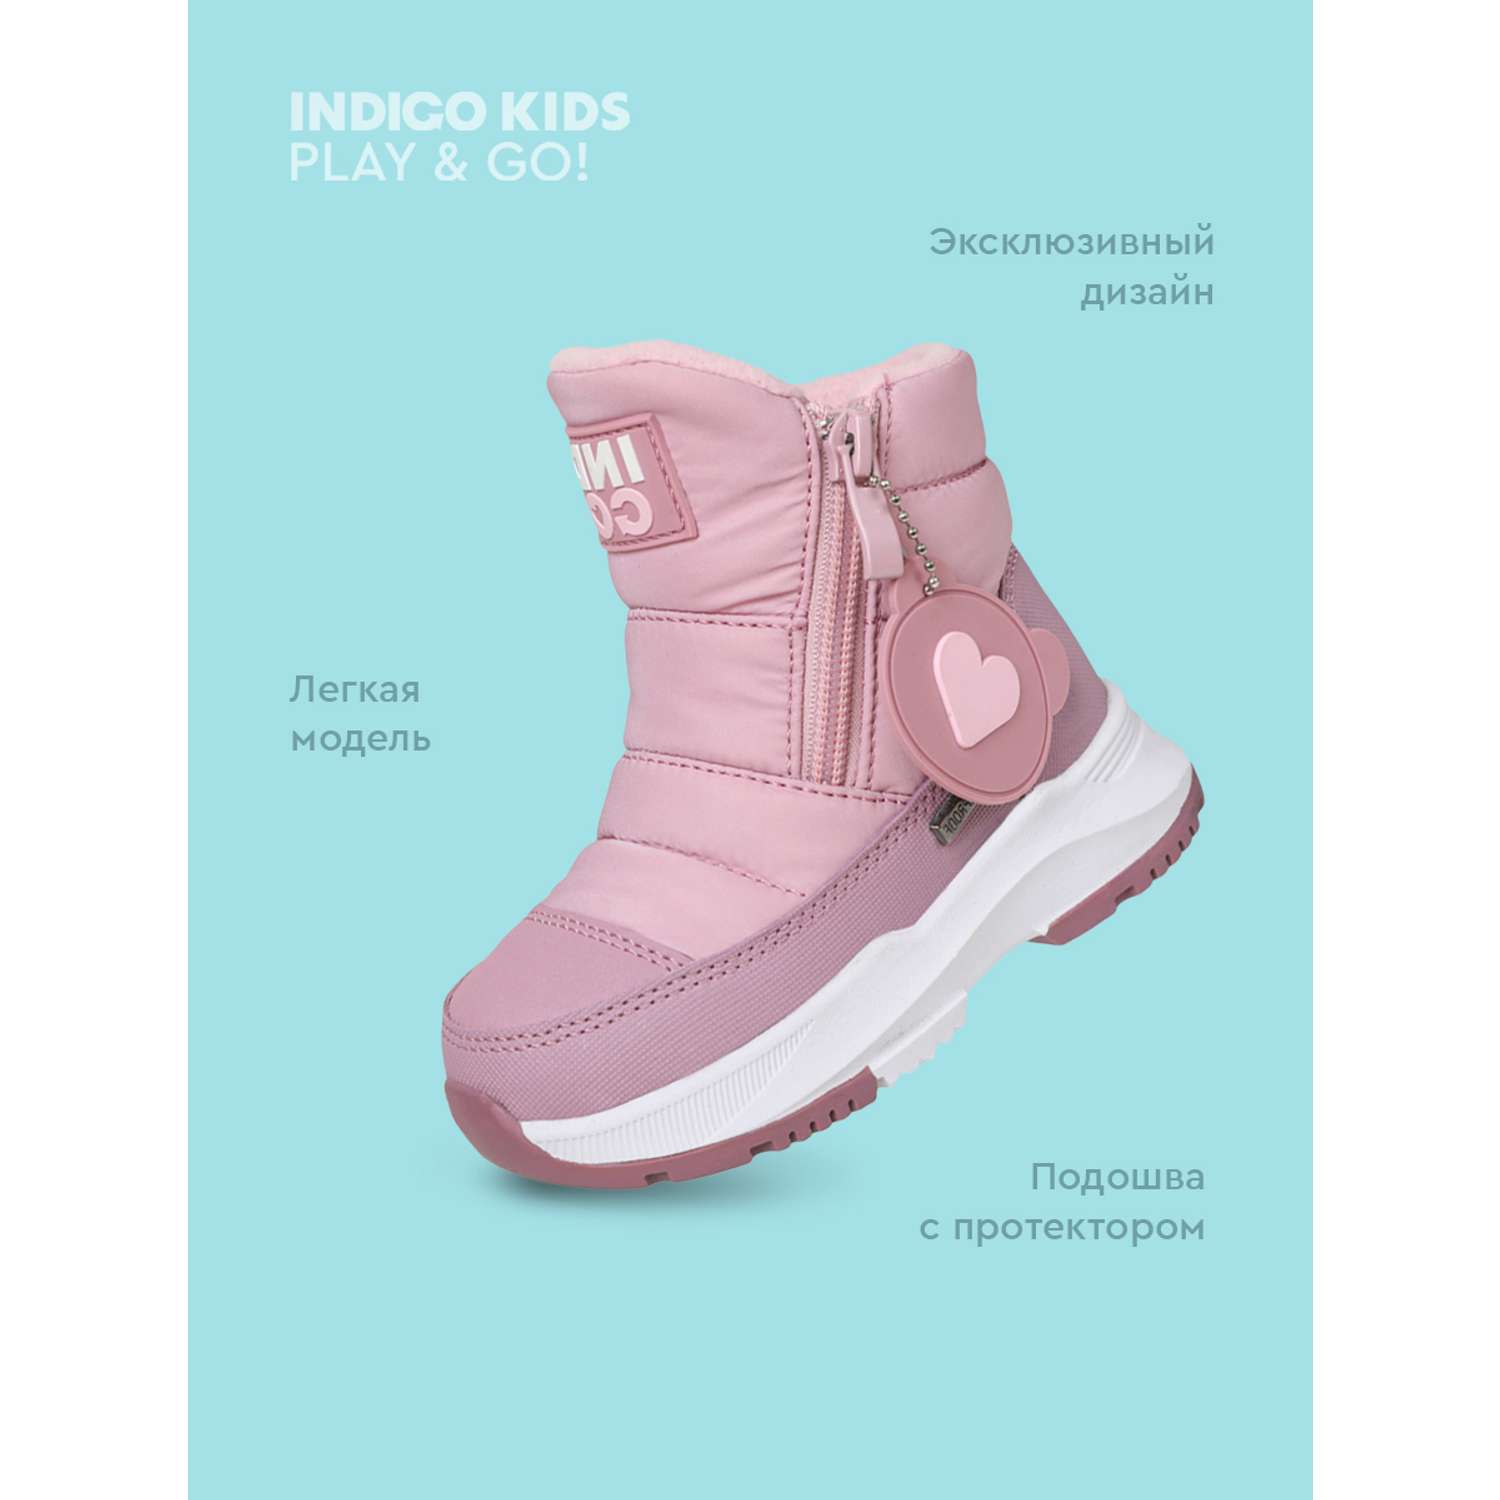 Ботинки Indigo kids 71-0033A - фото 8